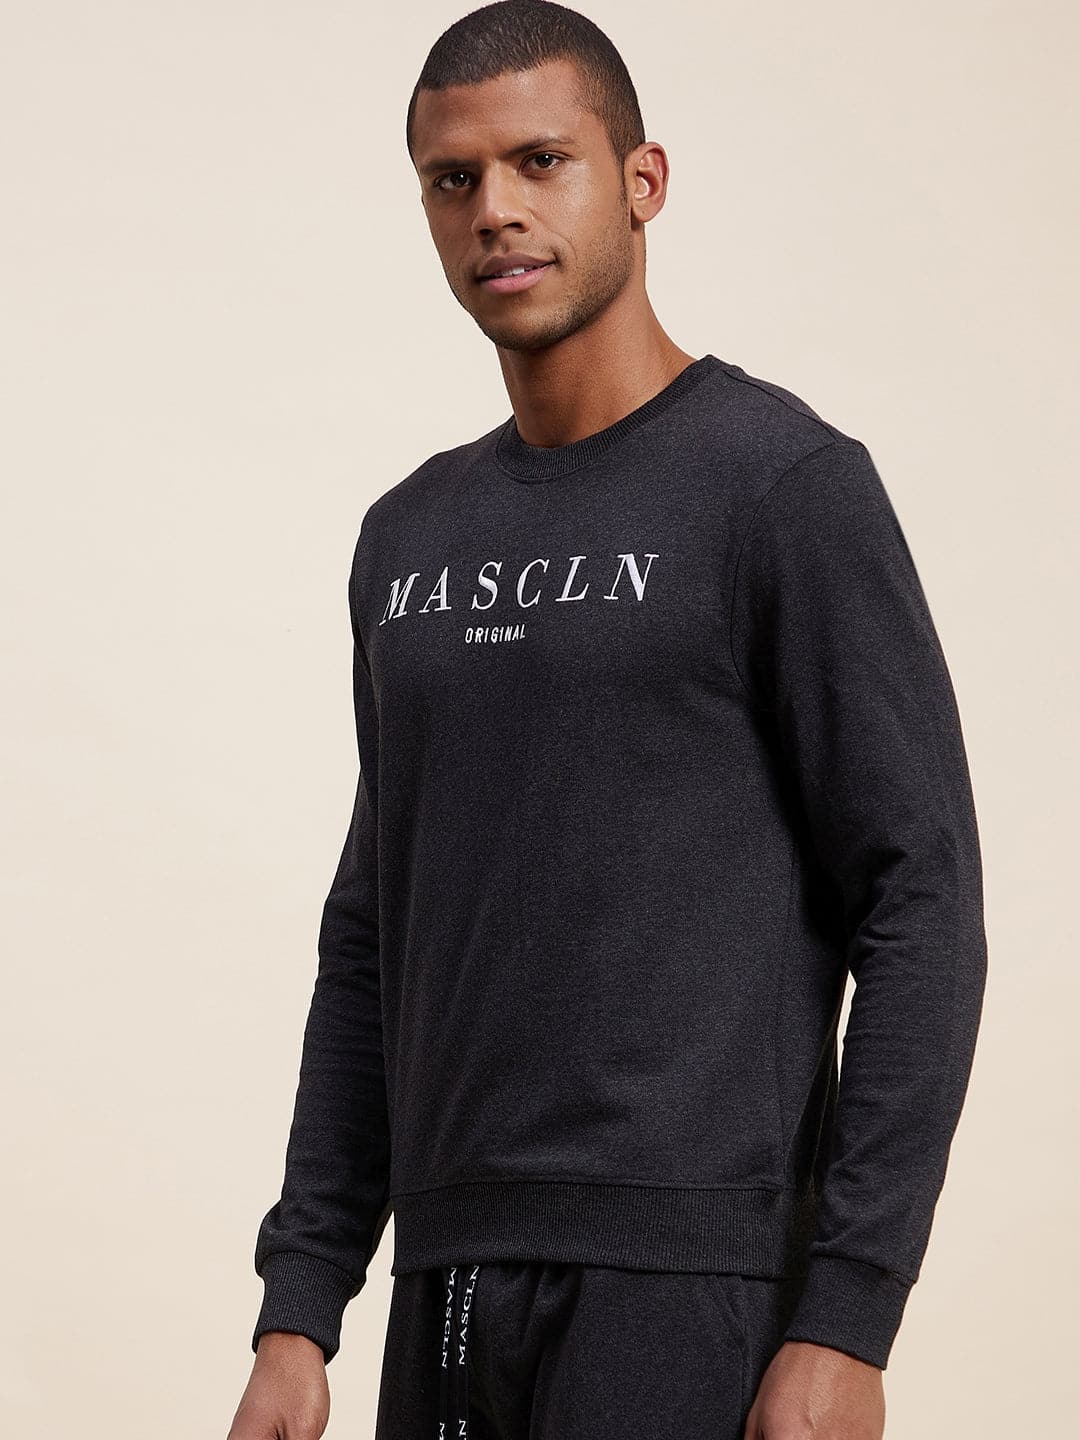 Men's Dark Grey MASCLN Embroidered Sweatshirt - LYUSH-MASCLN